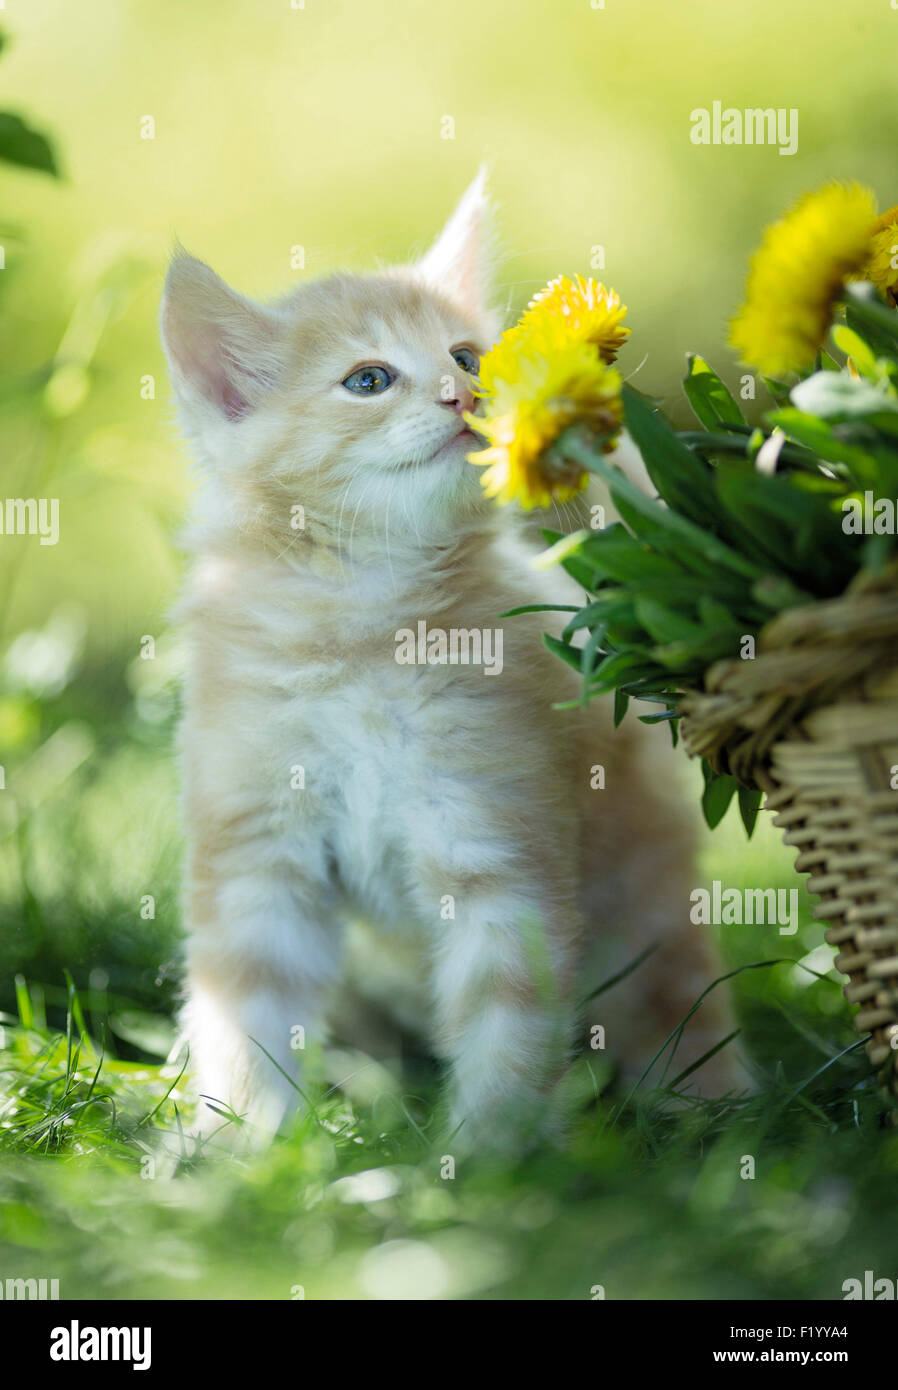 https://c8.alamy.com/comp/F1YYA4/norwegian-forest-cat-tabby-kitten-sniffing-at-straw-daisy-basket-germany-F1YYA4.jpg